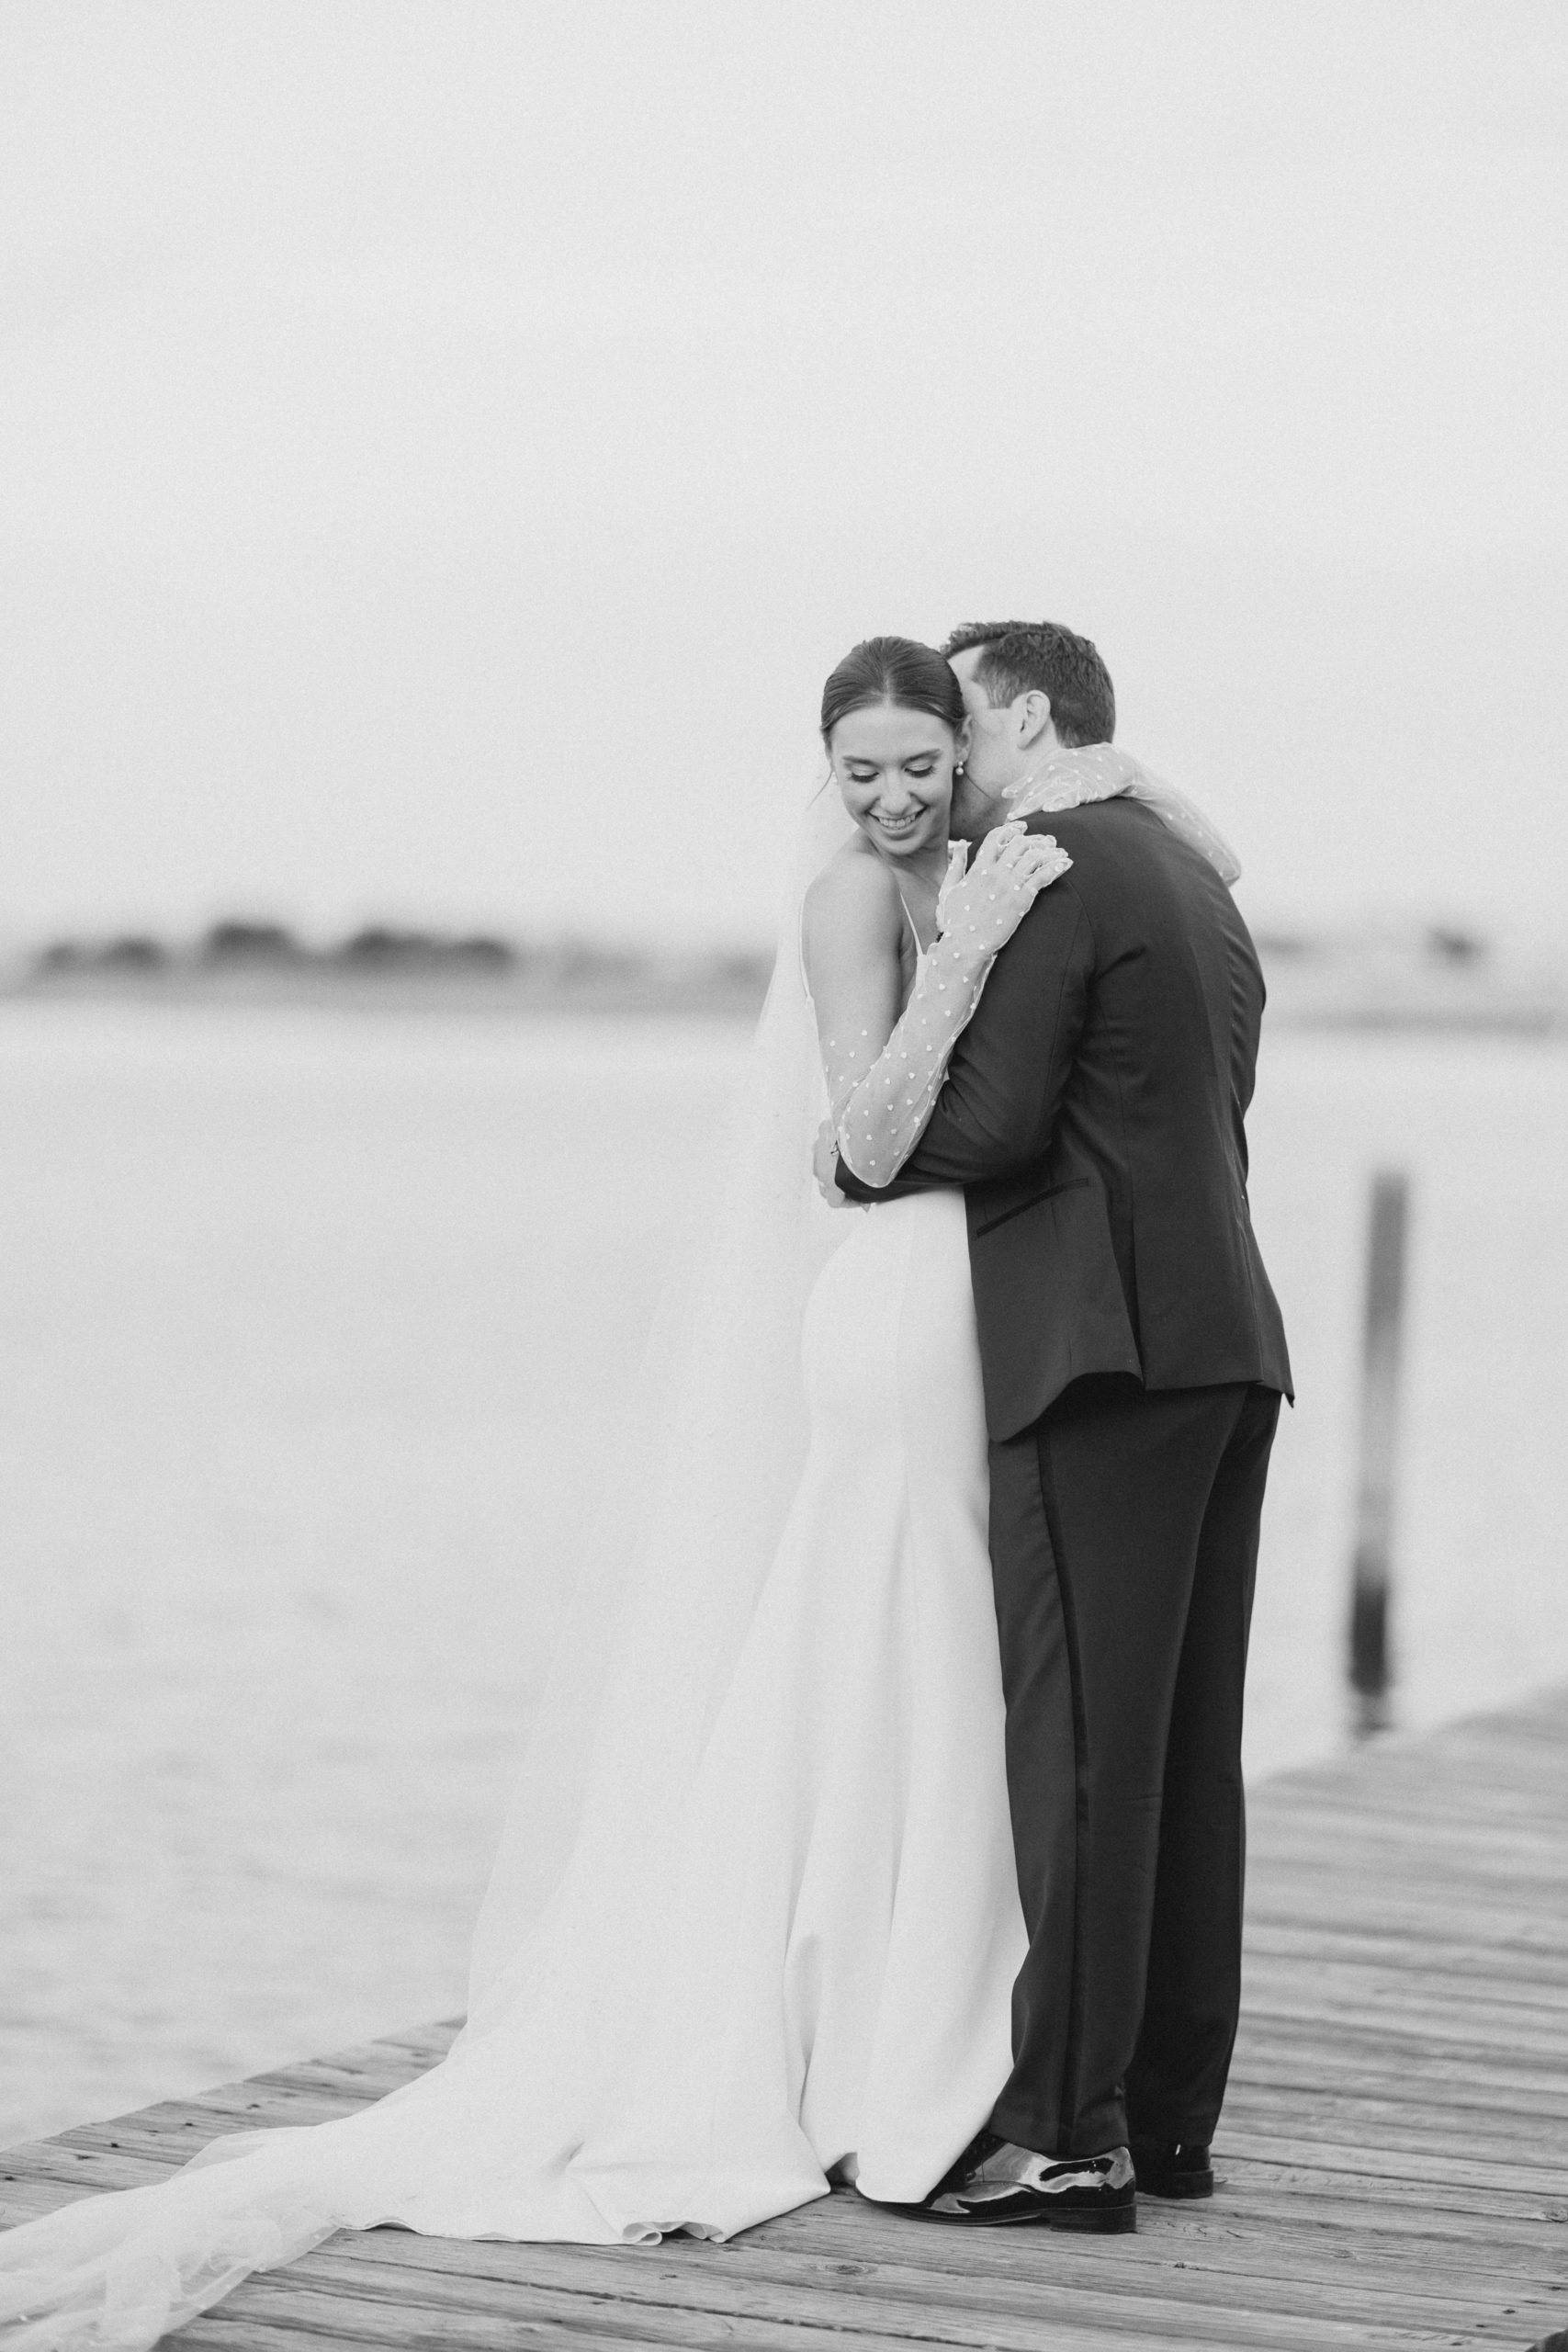 Do You Need Two Wedding Photographers On Your Wedding Day?